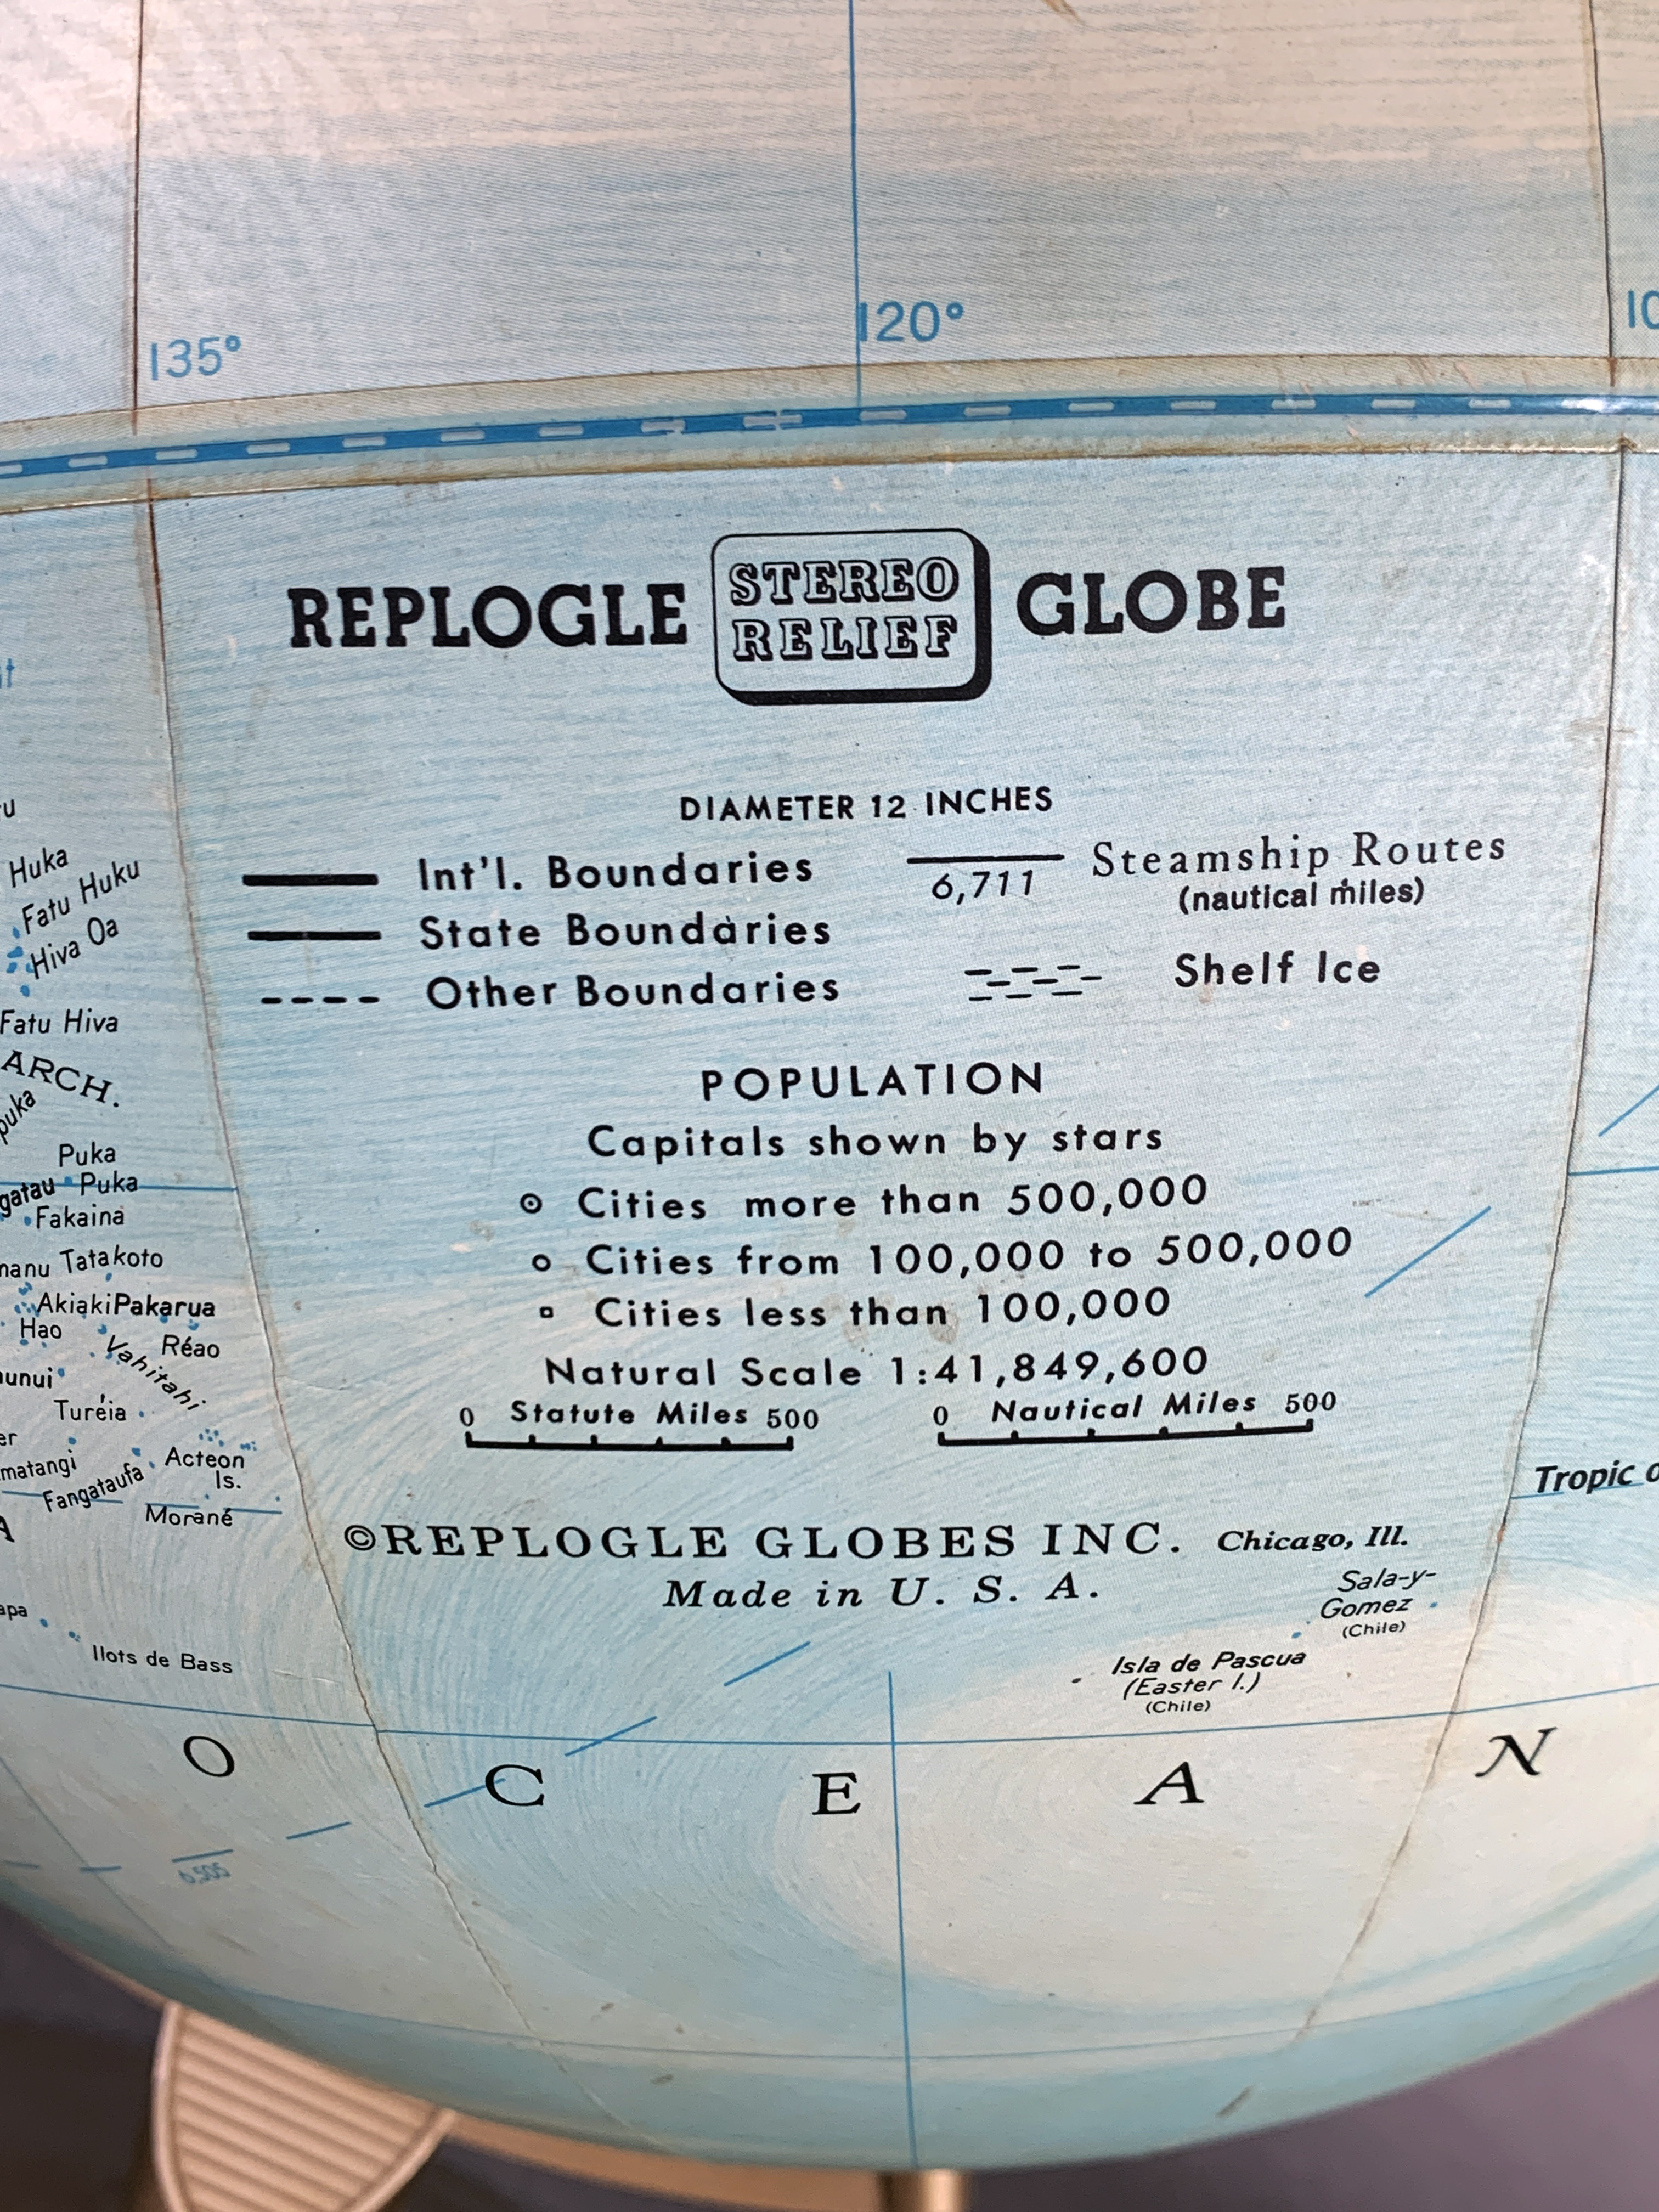 Vintage Replogle Stereo Relief Globe  image 3